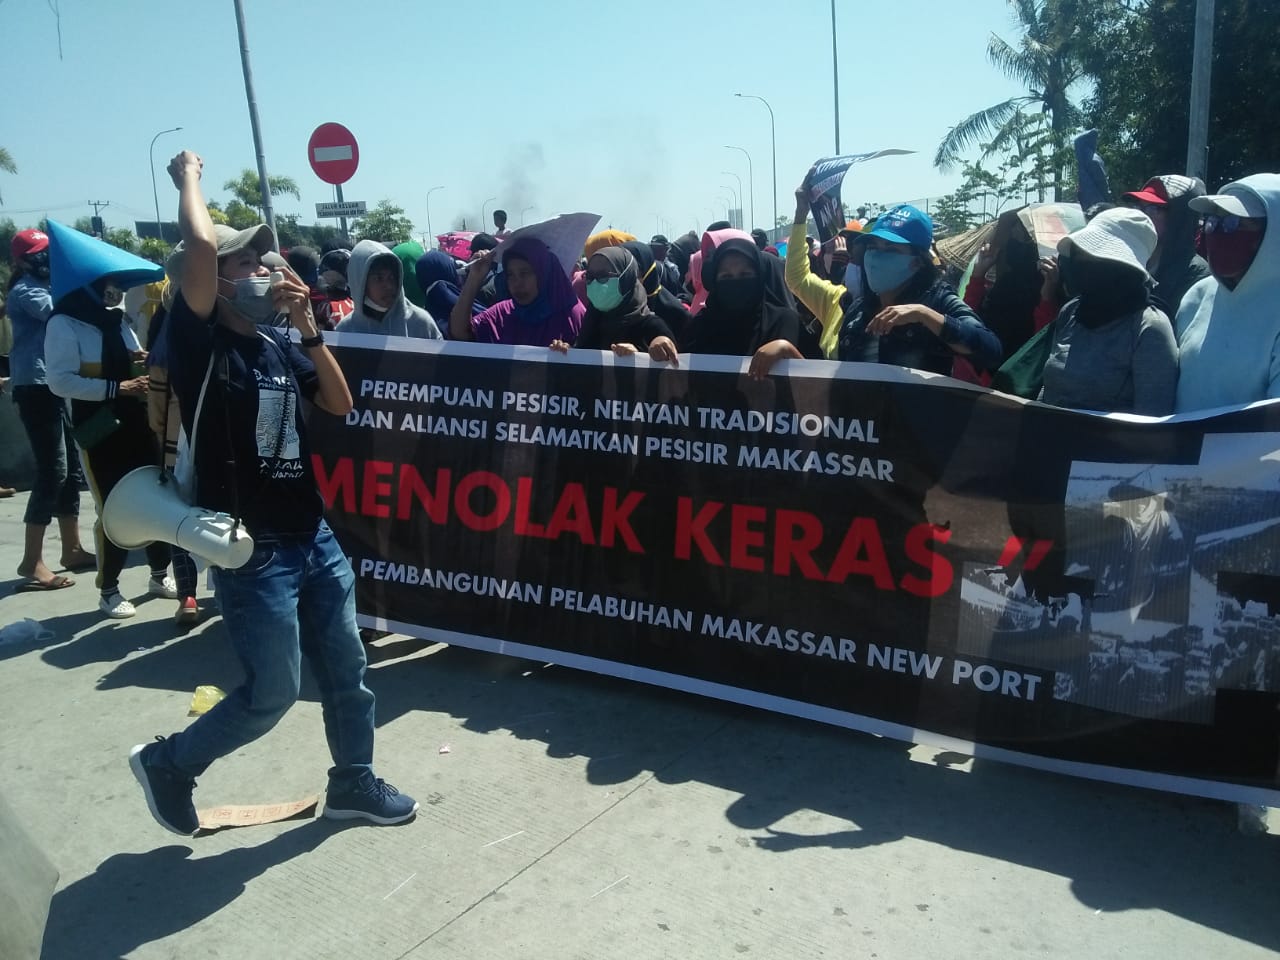 Ratusan massa aksi yang mengatasnamakan perempuan pesisir, nelayan tradisional dan aliansi selamatkan pesisir menggelar unjuk rasa di depan proyek Makassar New Port, Rabu (29/7/2020)